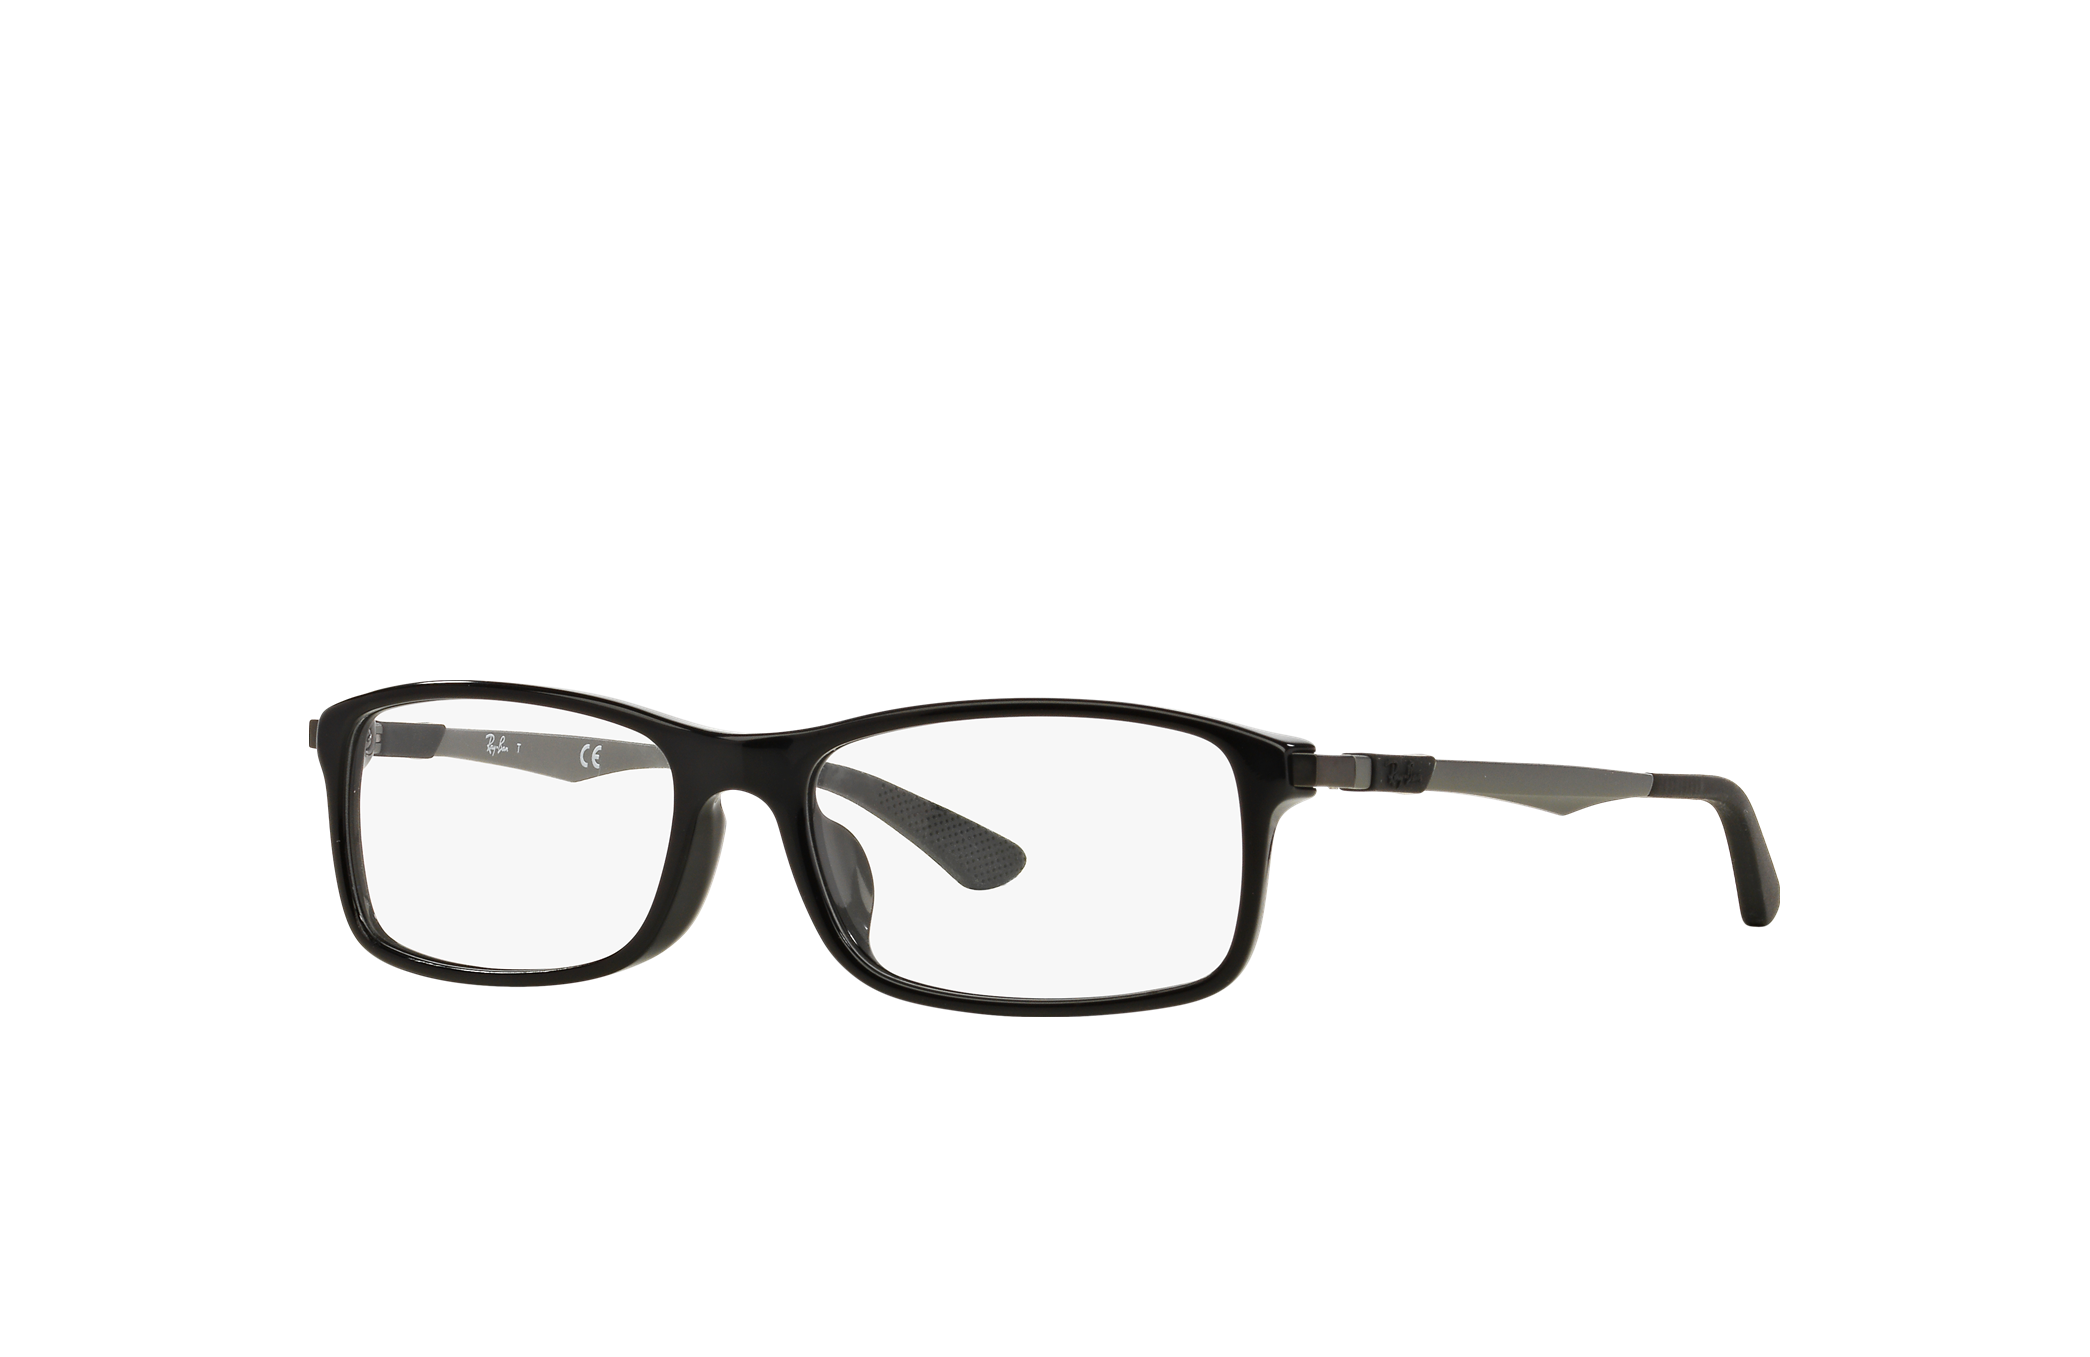 Rb7017f Eyeglasses with Black Frame - RB7017F | Ray-Ban®